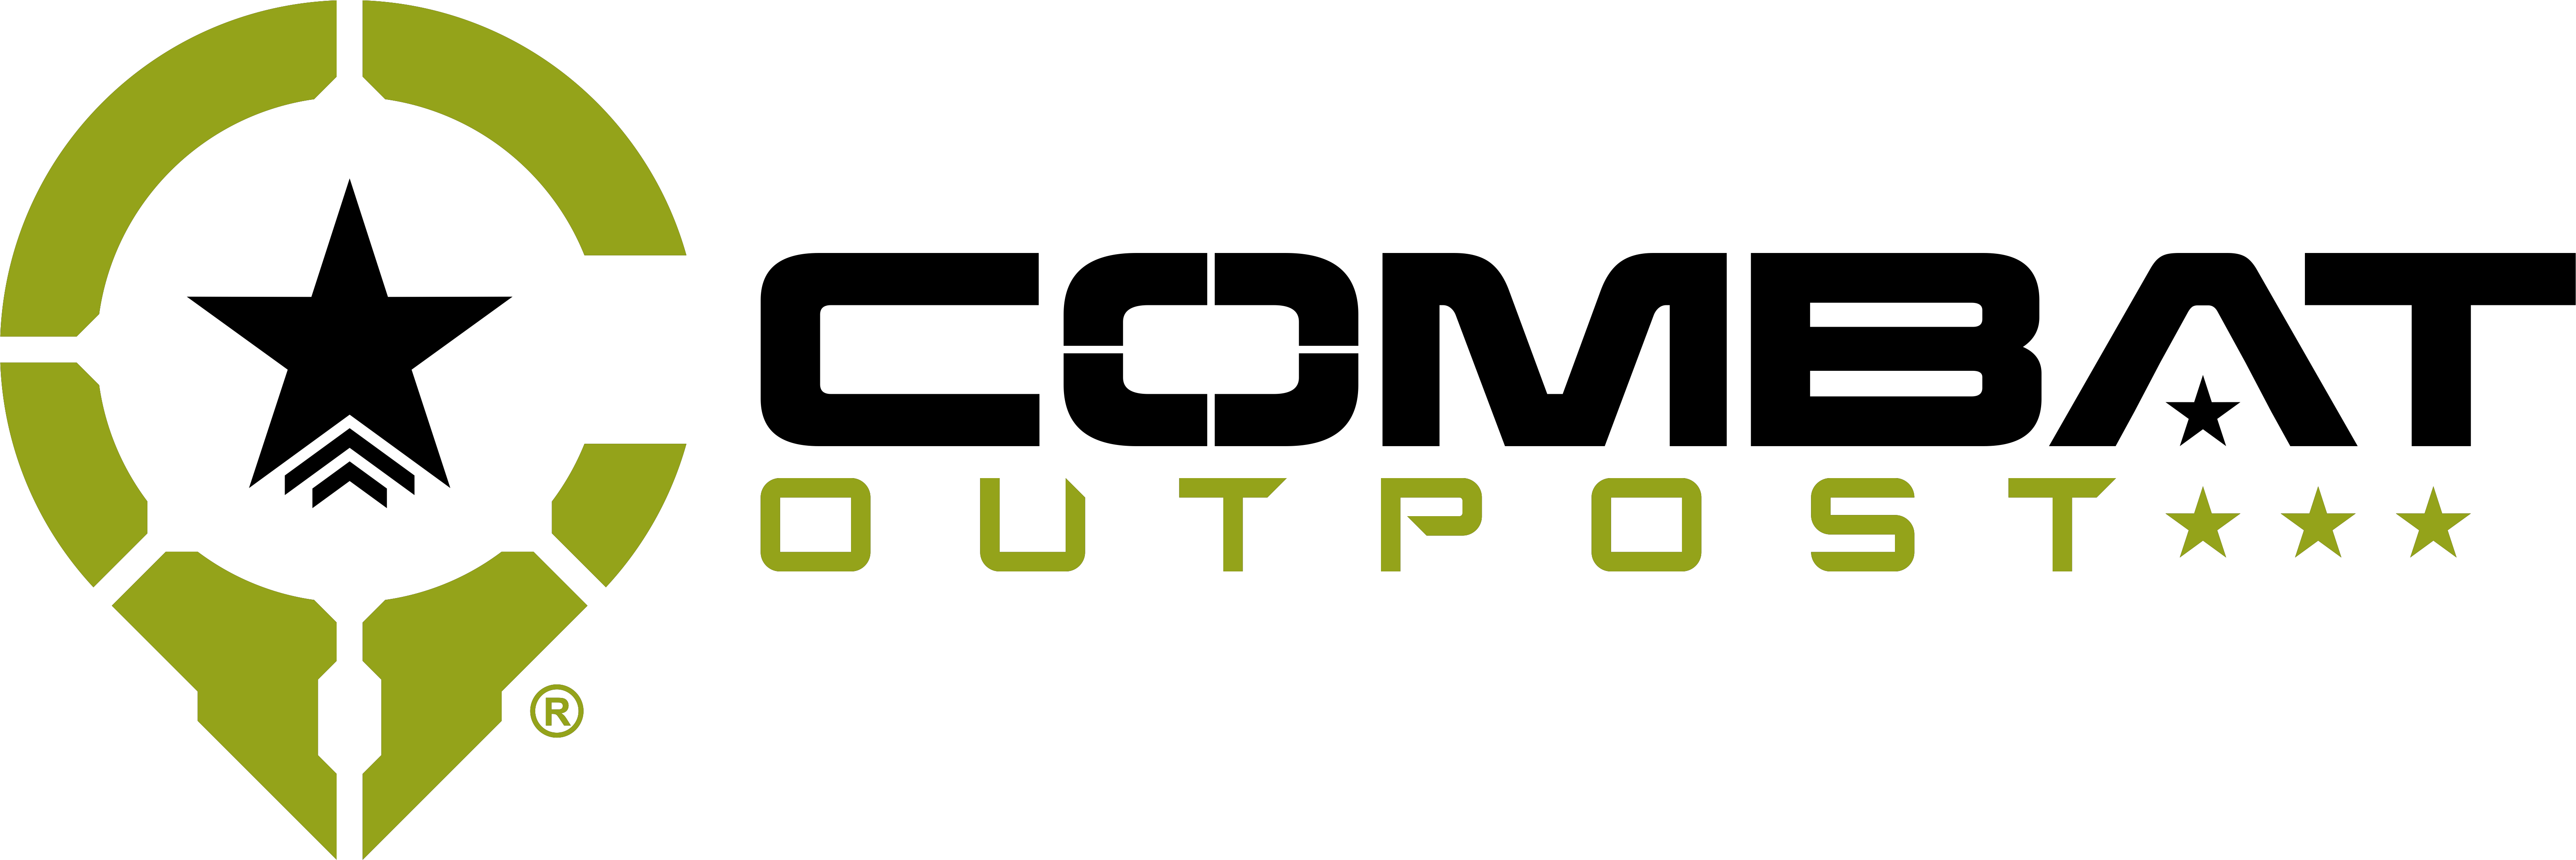 combat outpost logo